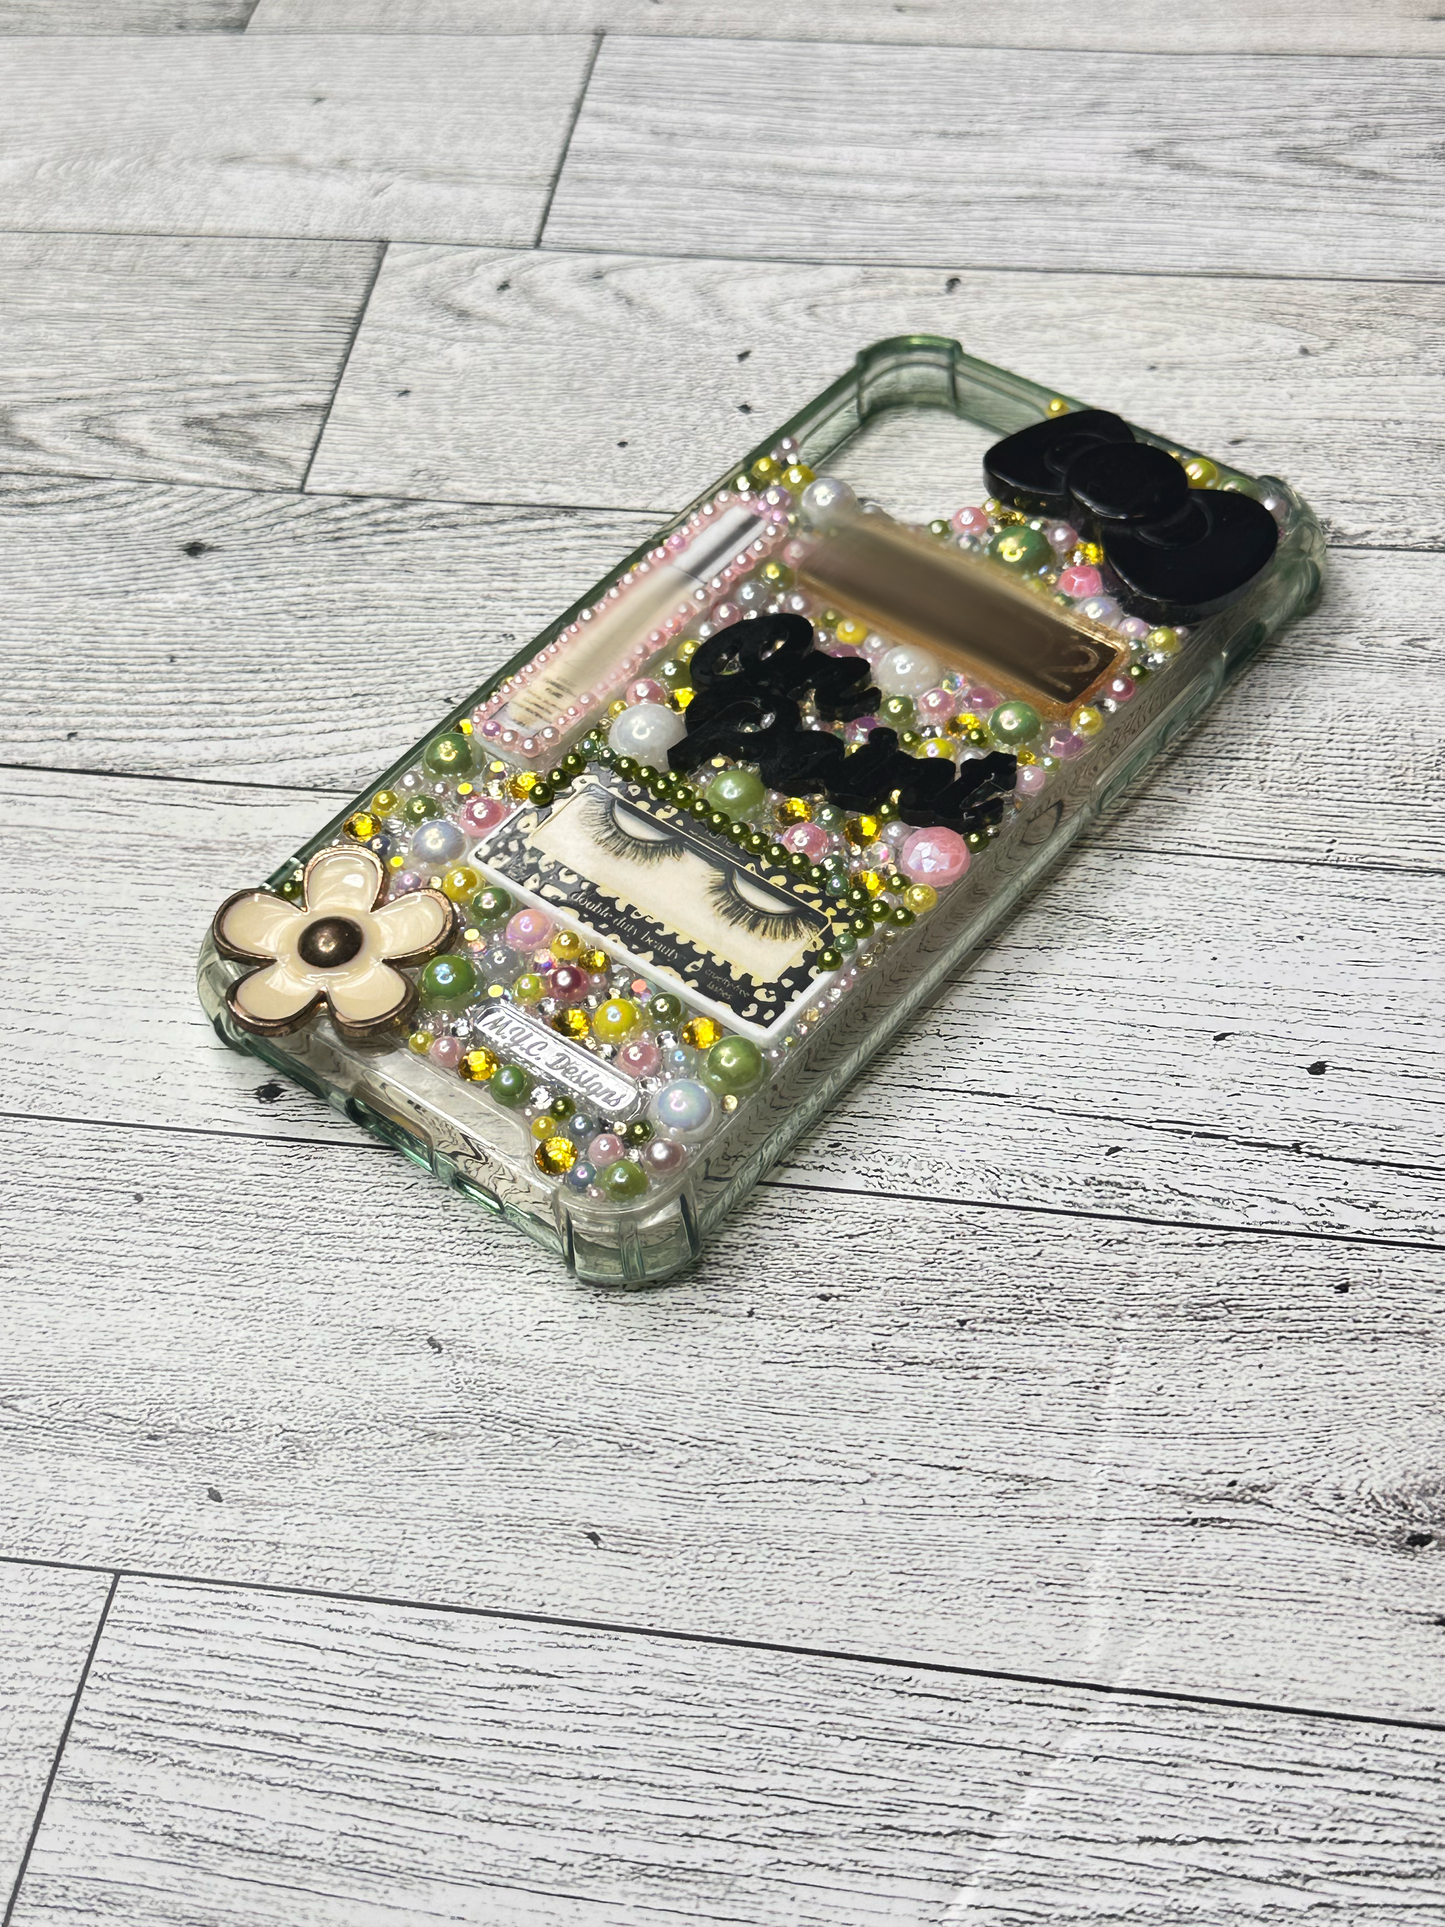 iPhone 11 Pro phone case